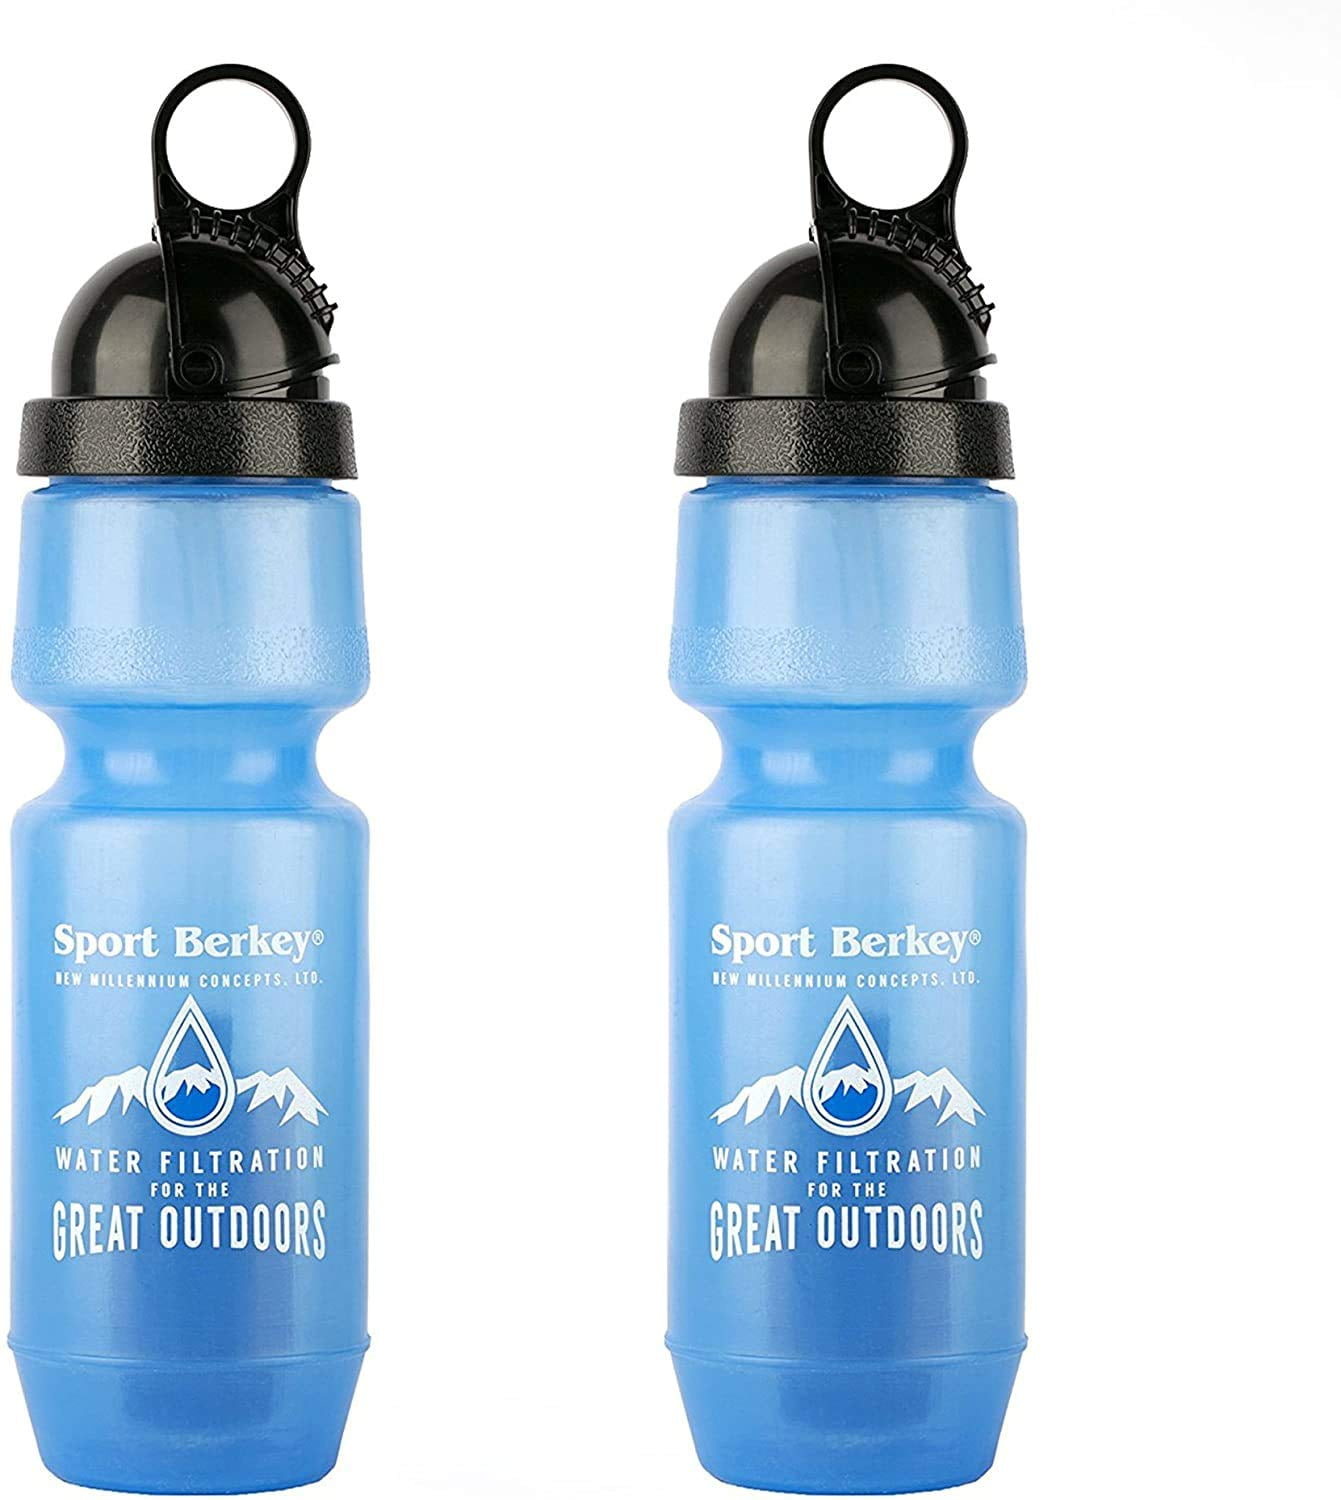 Contigo® Trekker Kids Water Bottle with AUTOSEAL® Lid, 14oz, 2-Pack